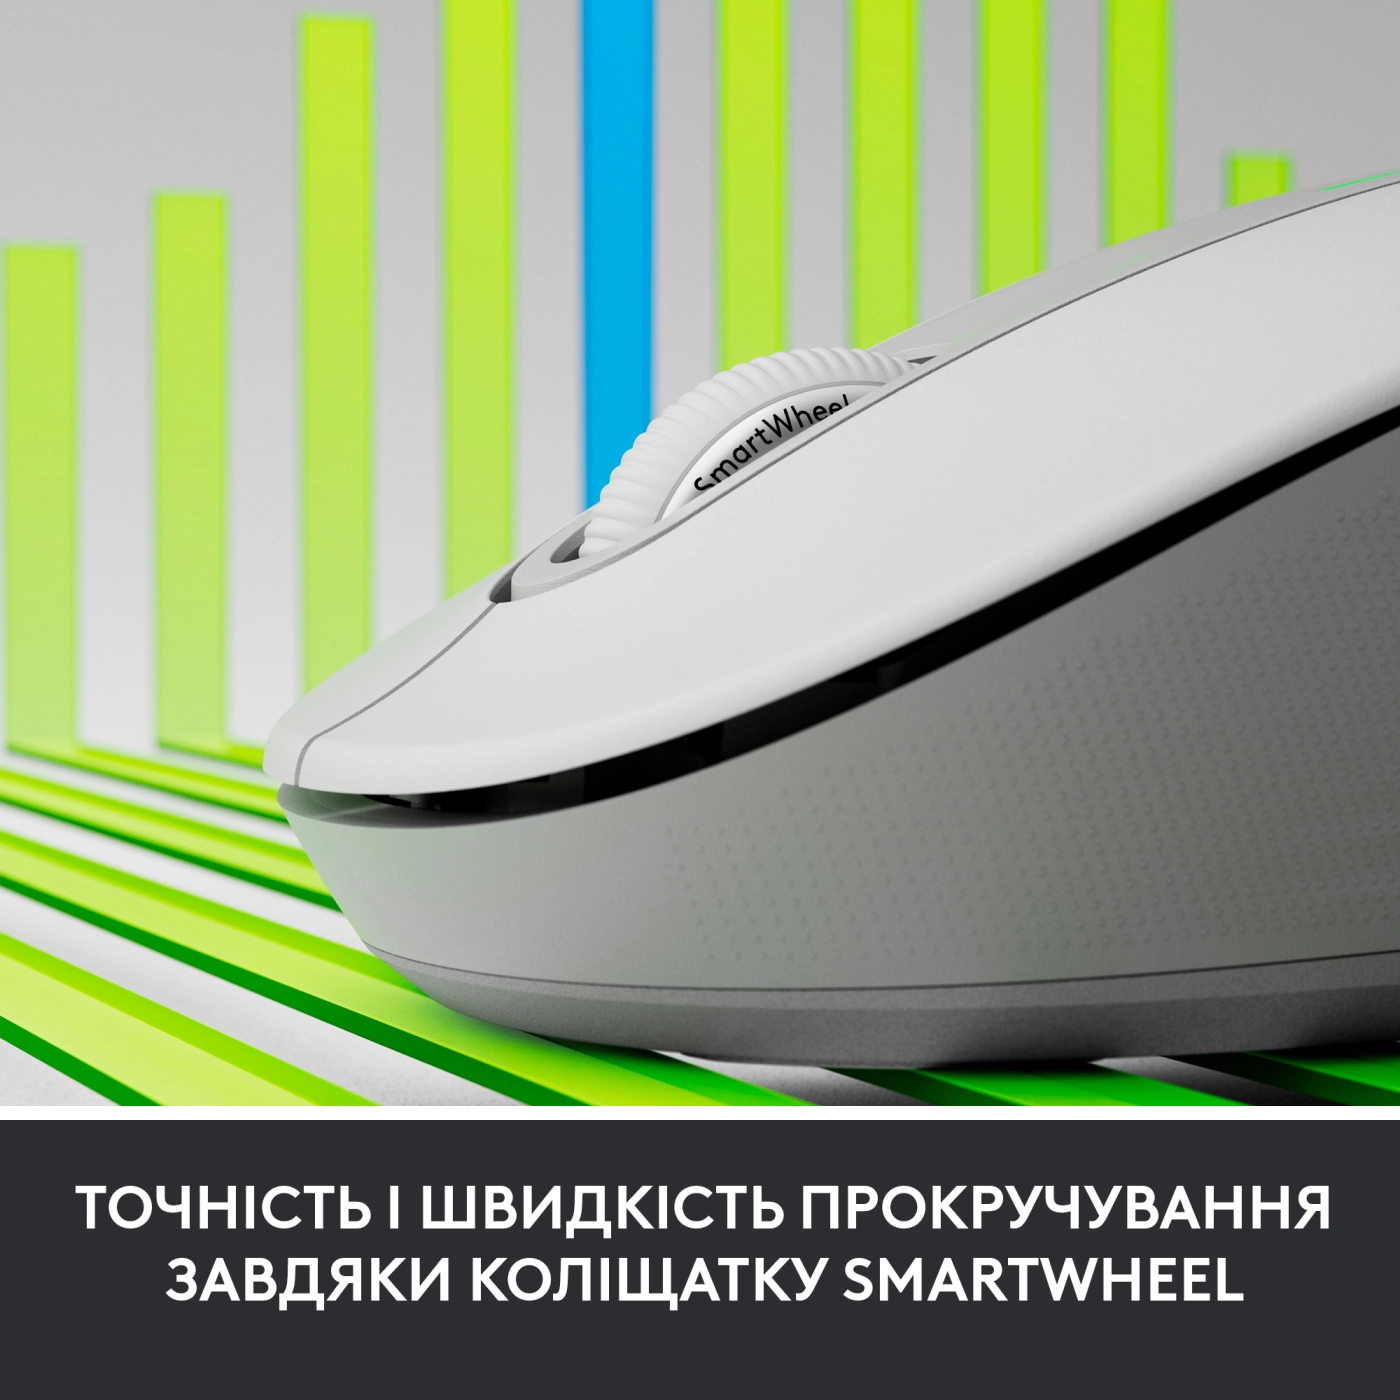 Купить Мышь Logitech Signature M650 Wireless Mouse for Business off-white BT (910-006275) - фото 5